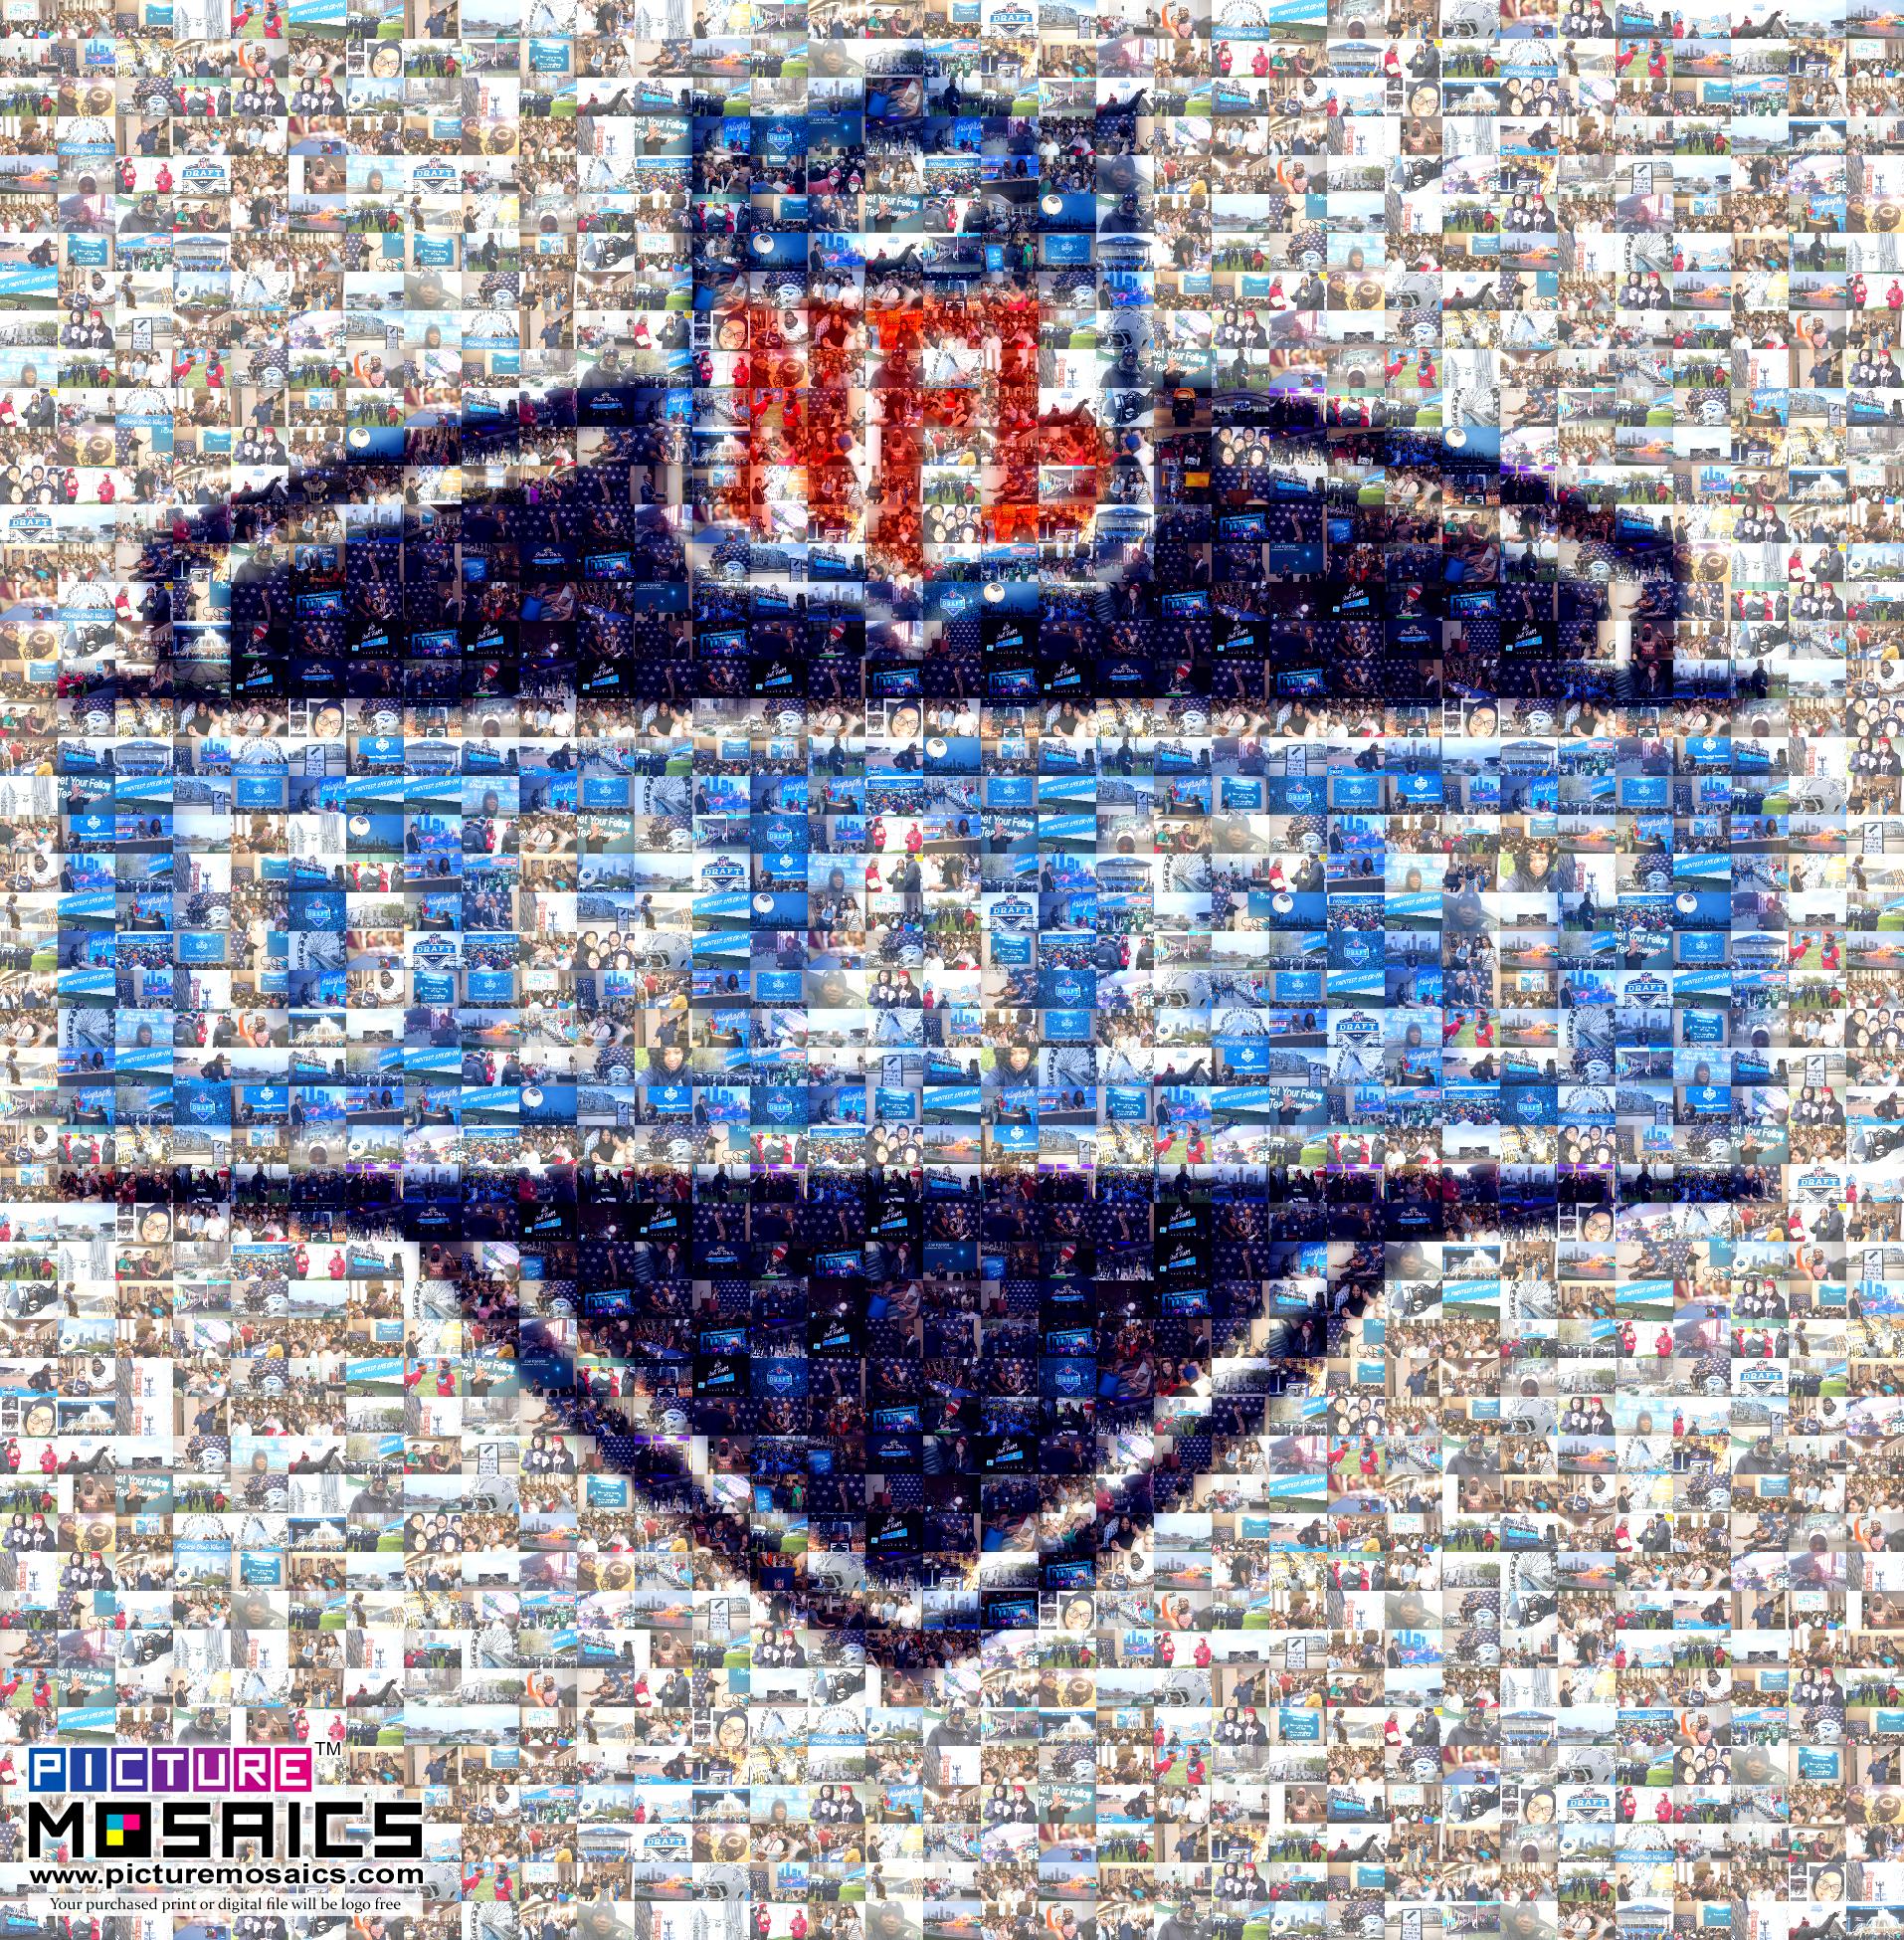 NFL Draft Photo Mosaic Picture Mosaics